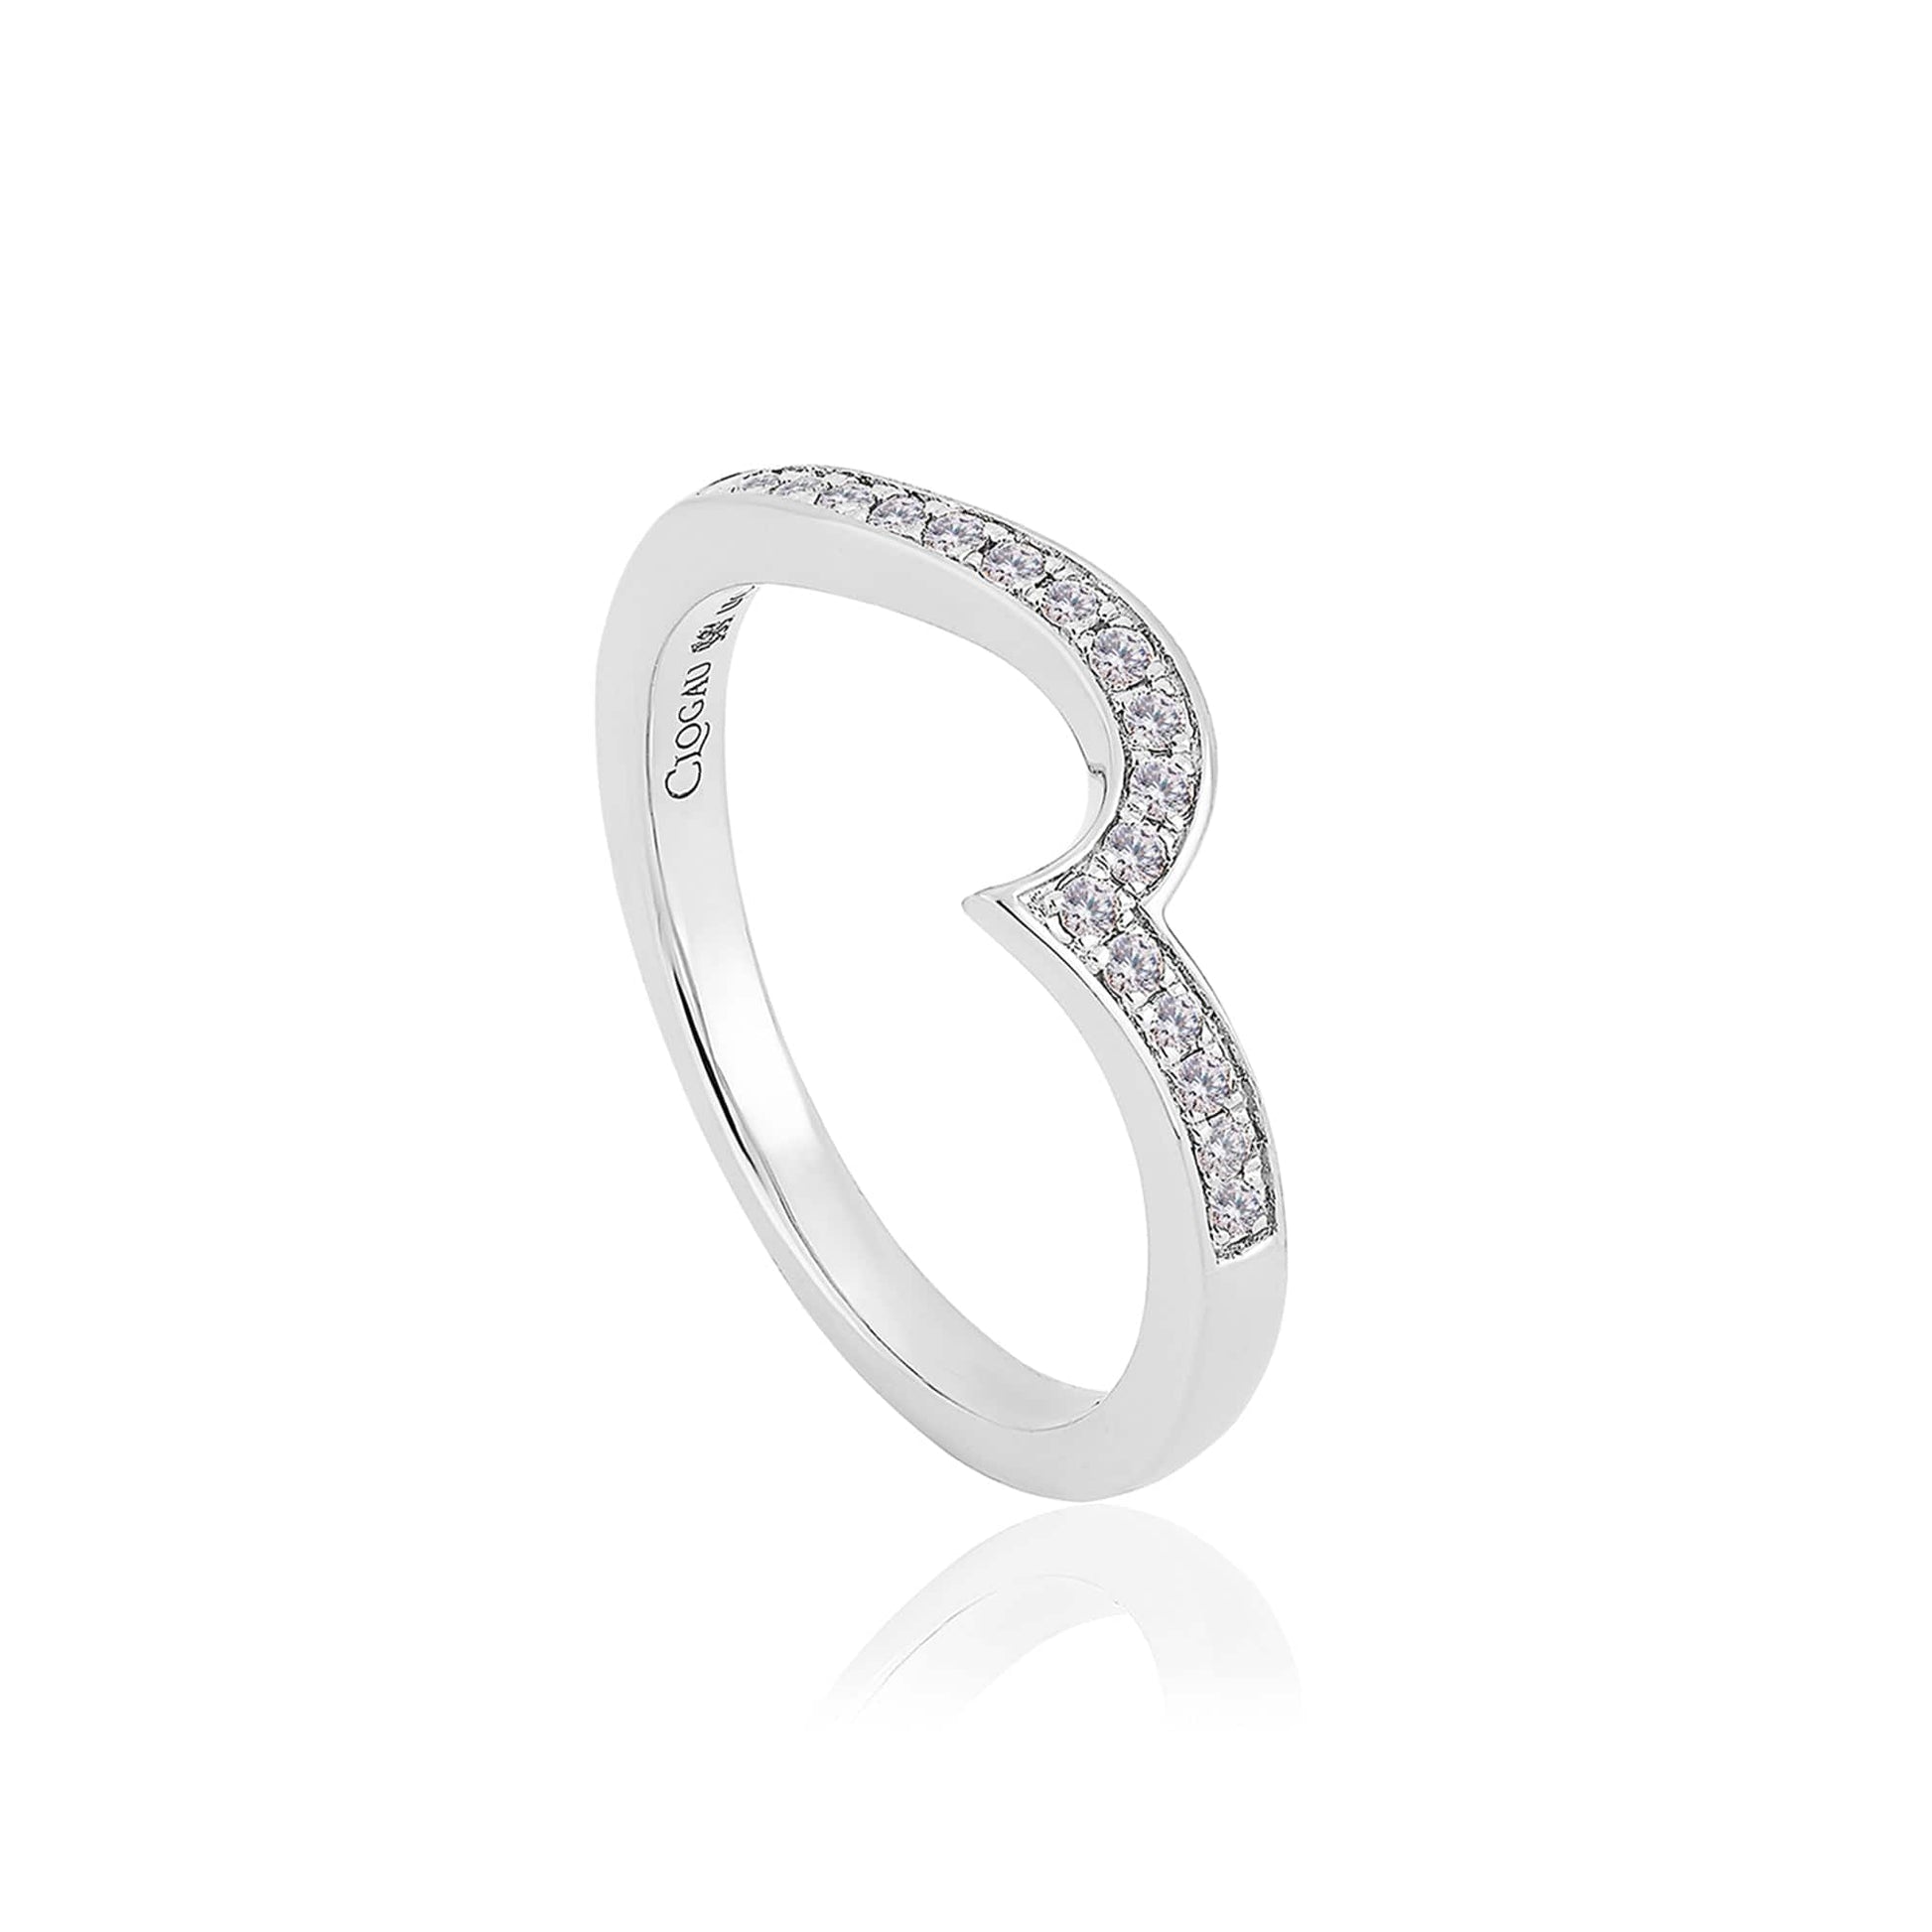 18ct White Gold True Romance Wedding Ring